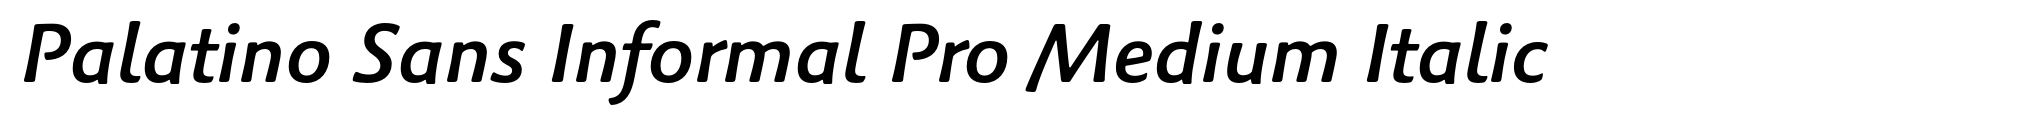 Palatino Sans Informal Pro Medium Italic image